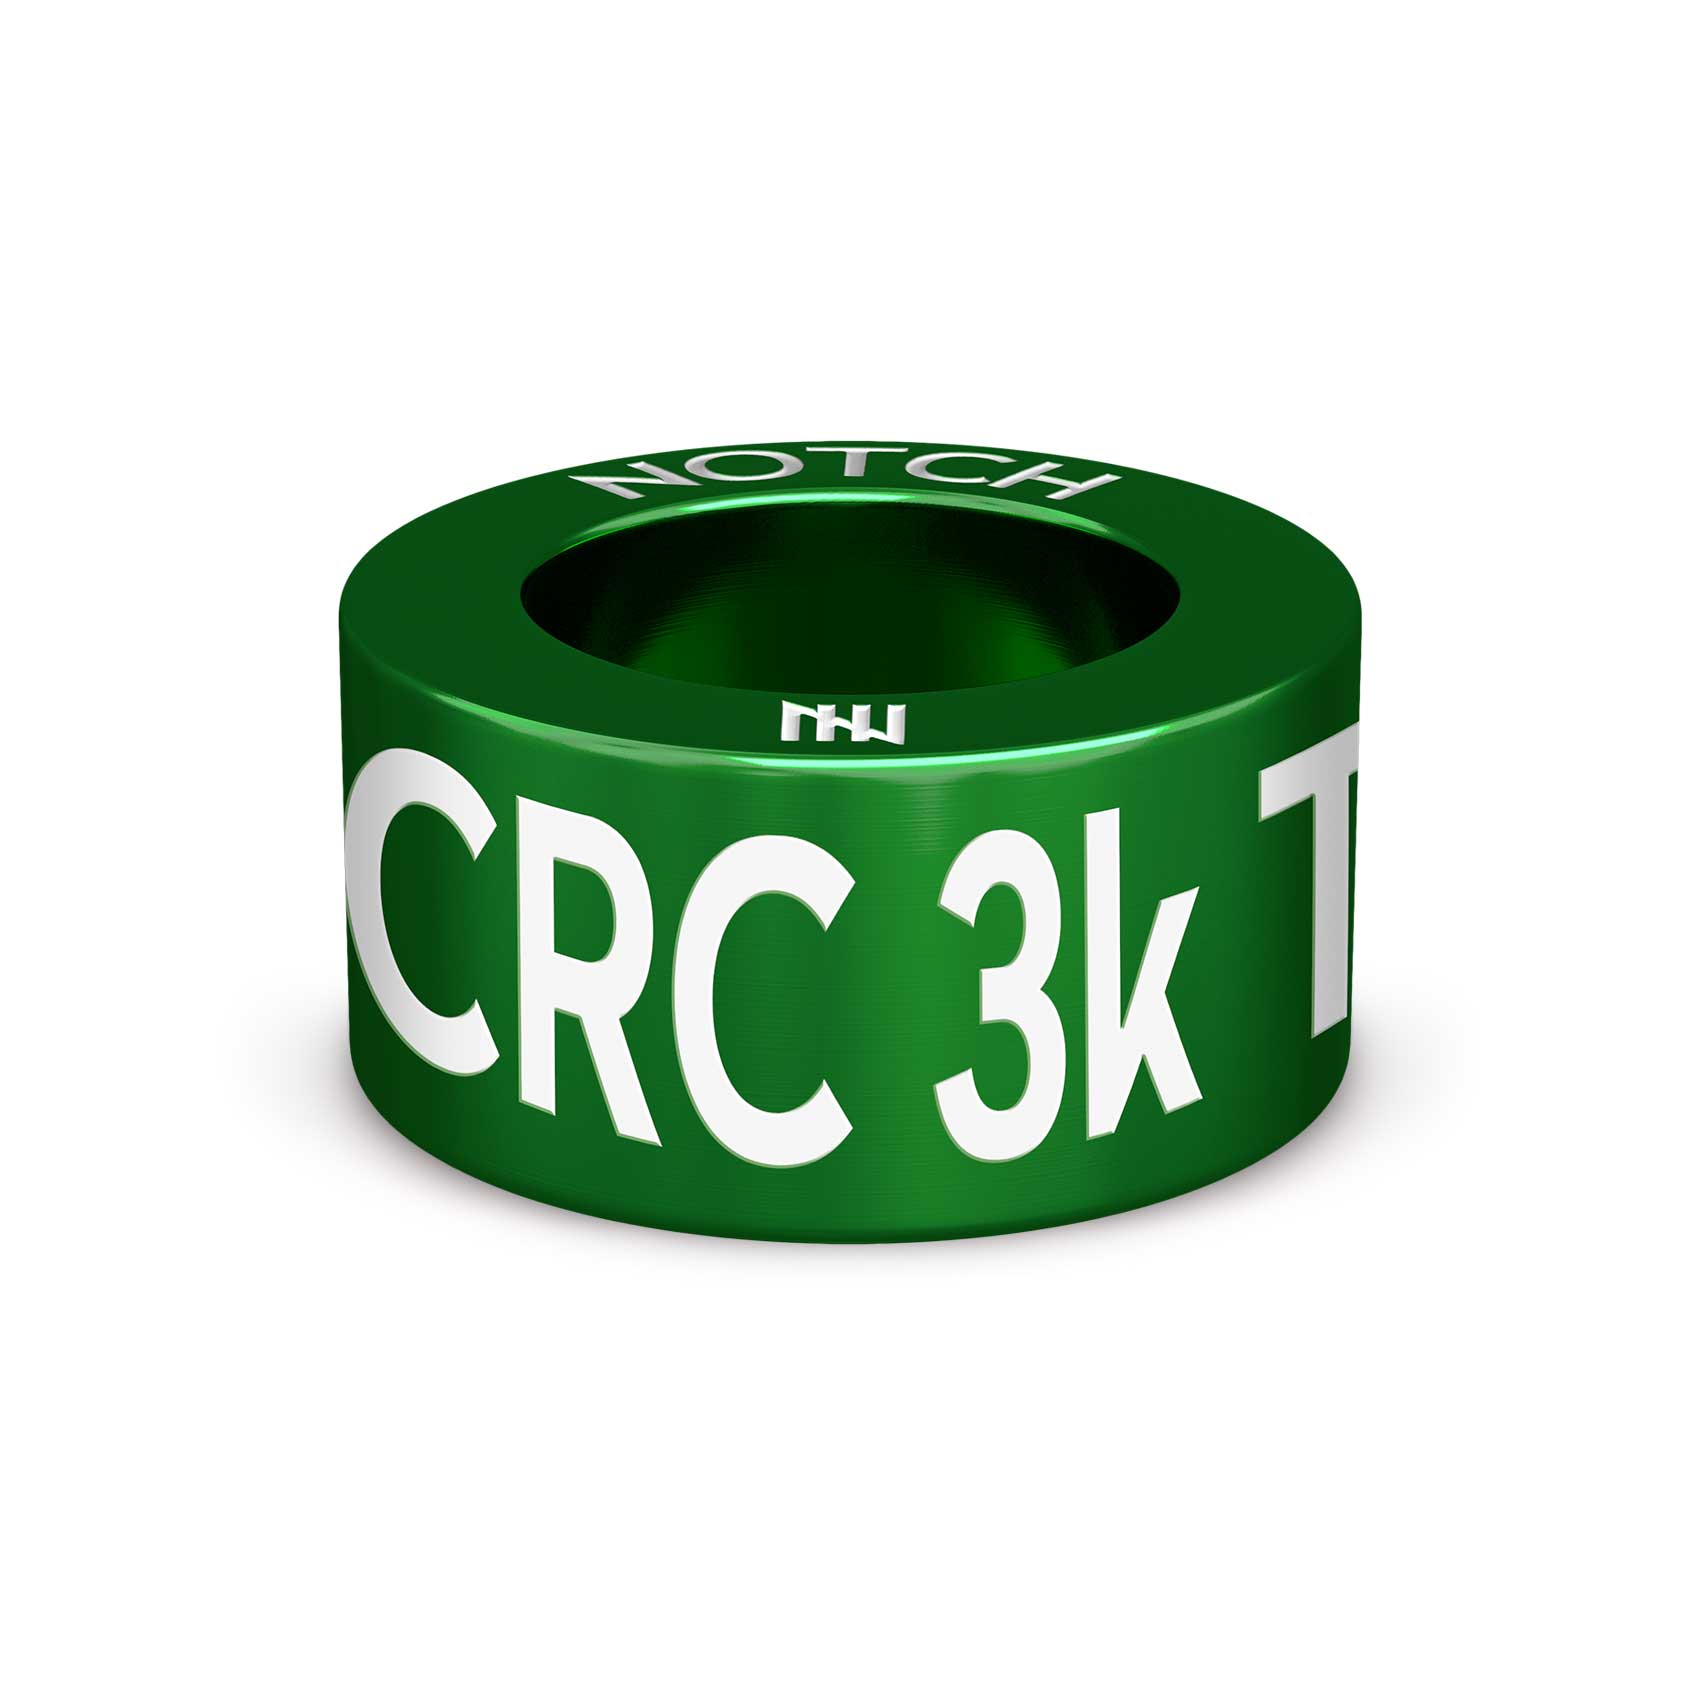 CRC 3k Time Trial NOTCH Charm